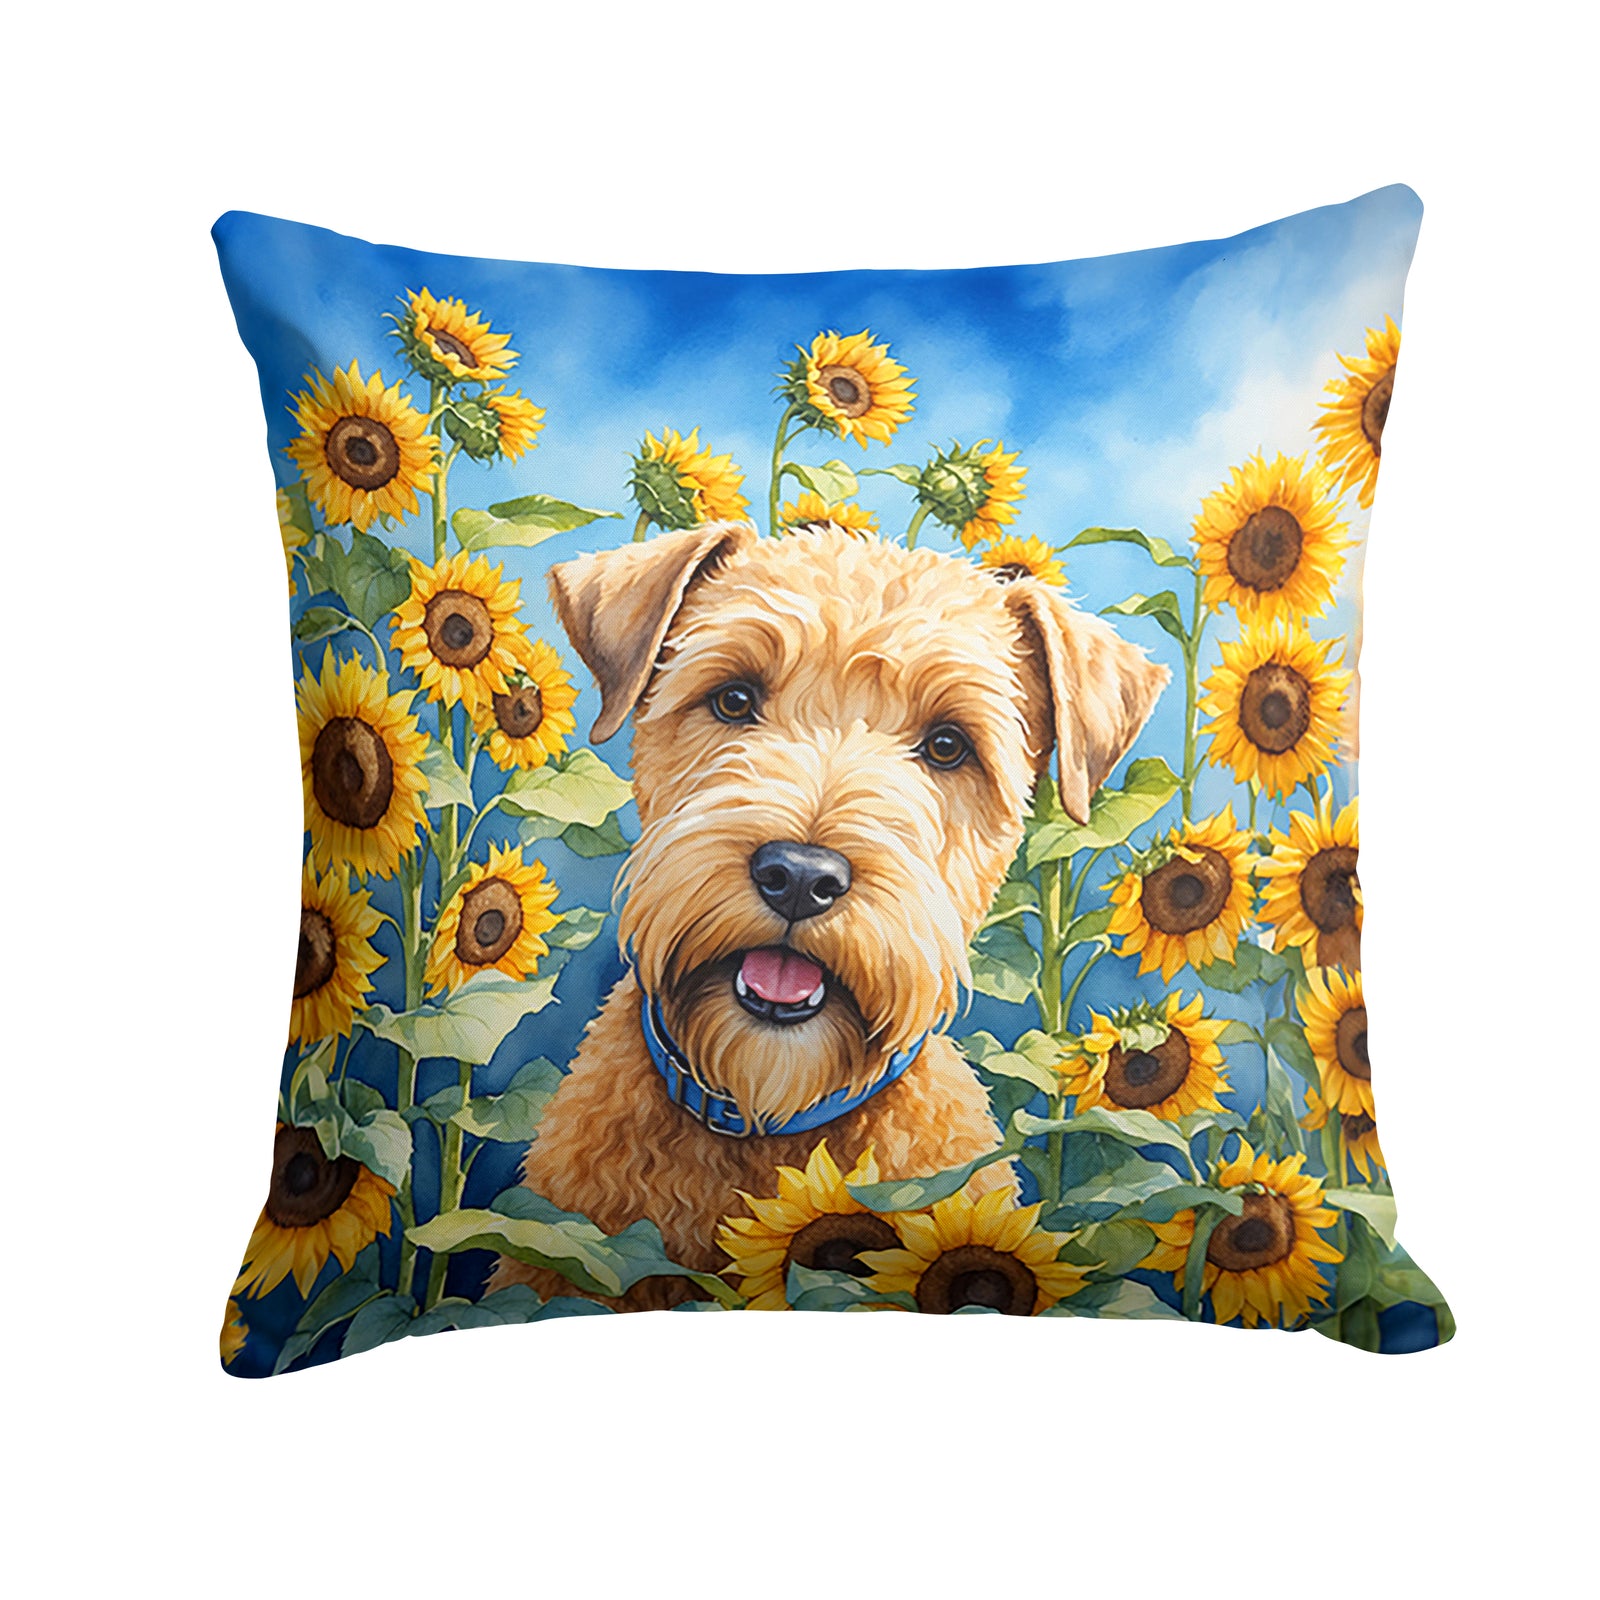 Buy this Wheaten Terrier in Sunflowers Throw Pillow